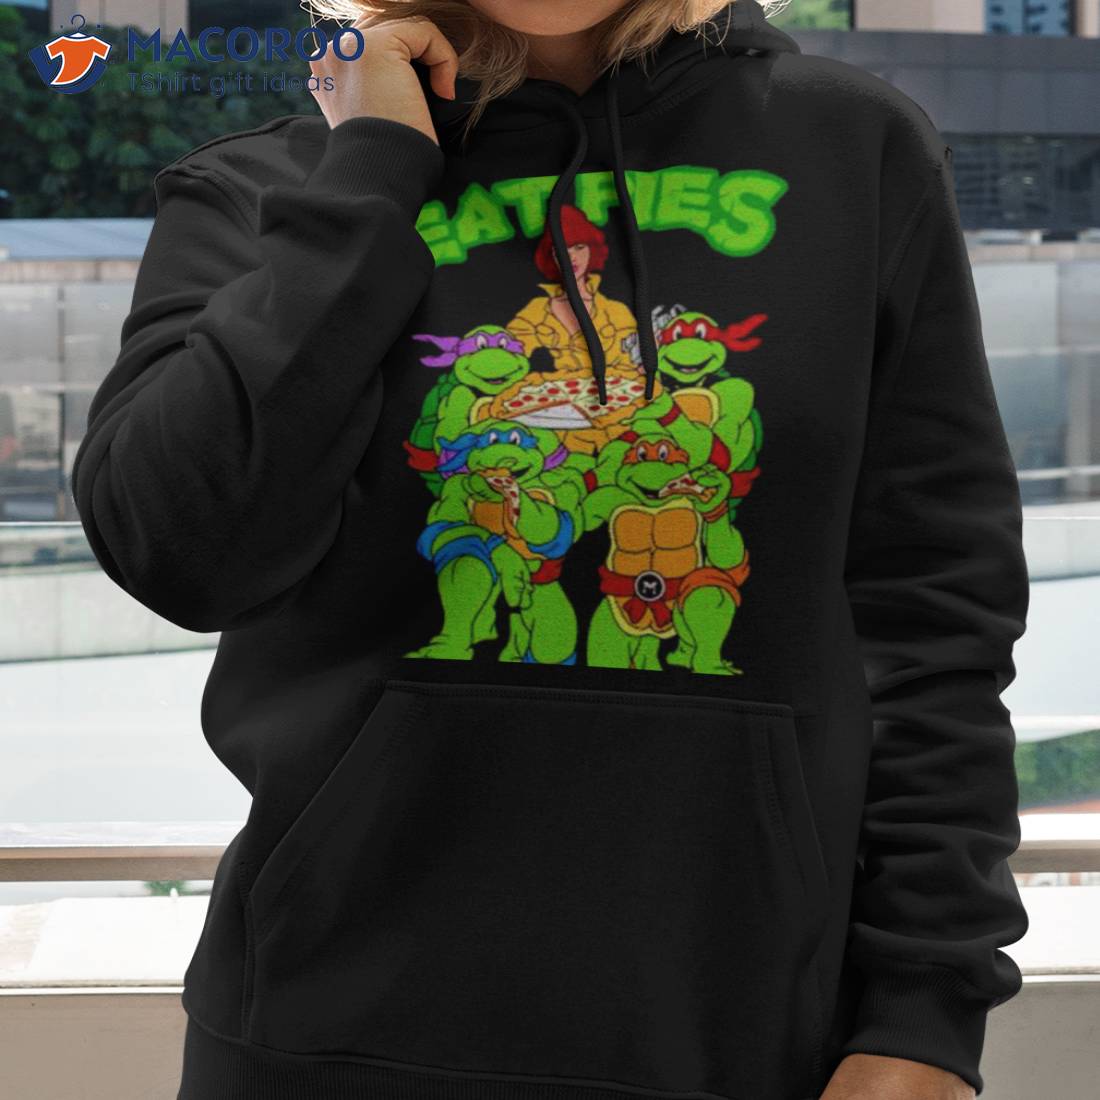 https://images.macoroo.com/wp-content/uploads/2023/06/ninja-turtles-girls-like-guys-that-eat-pies-shirt-hoodie.jpg